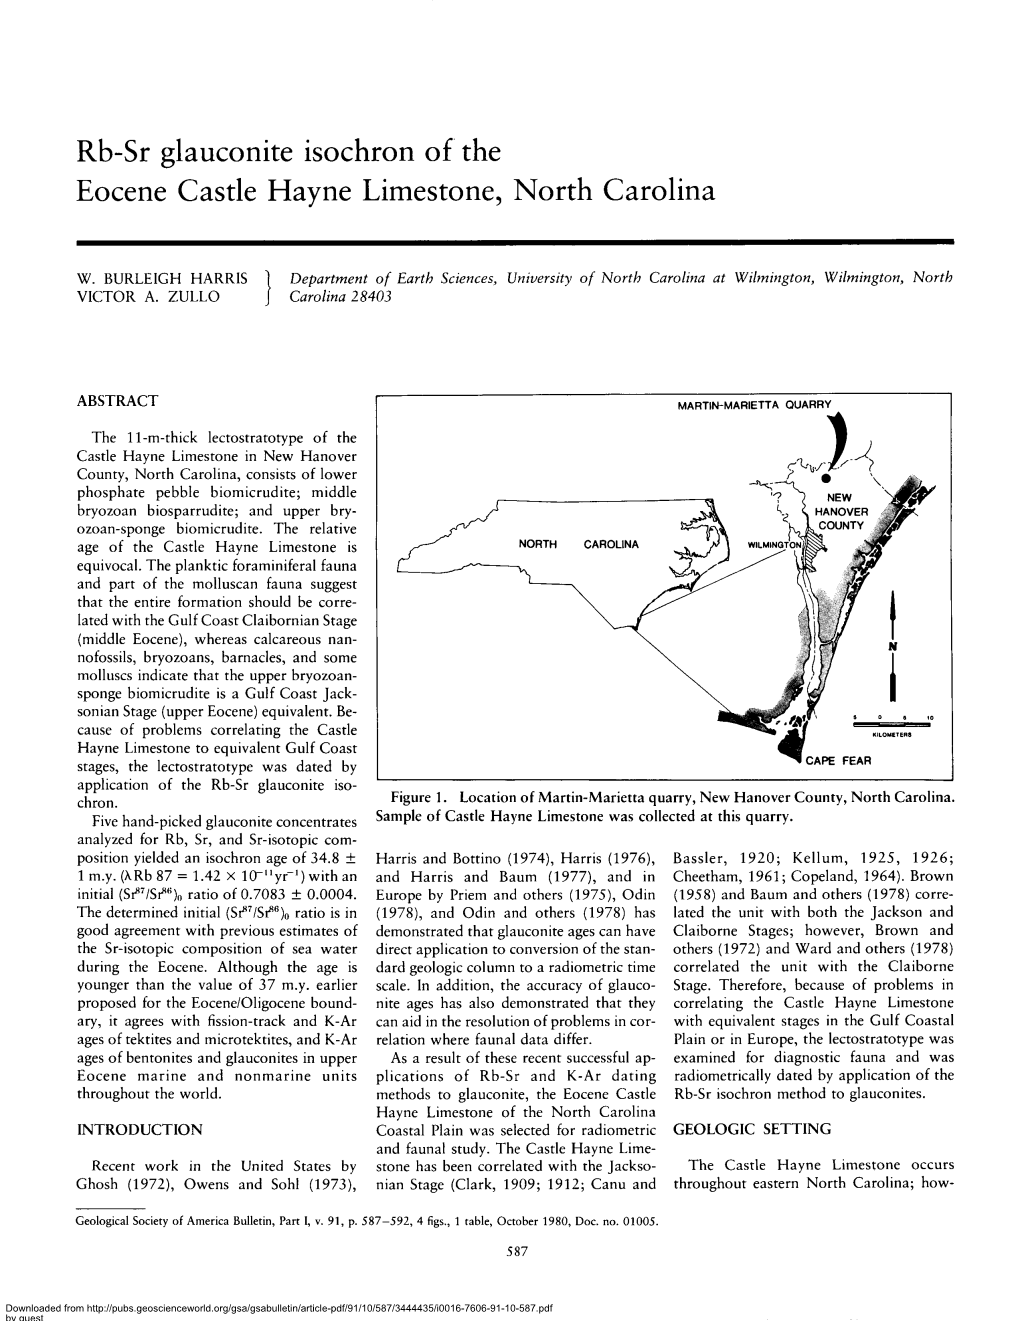 Rb-Sr Glauconite Isochron of the Eocene Castle Hayne Limestone, North Carolina